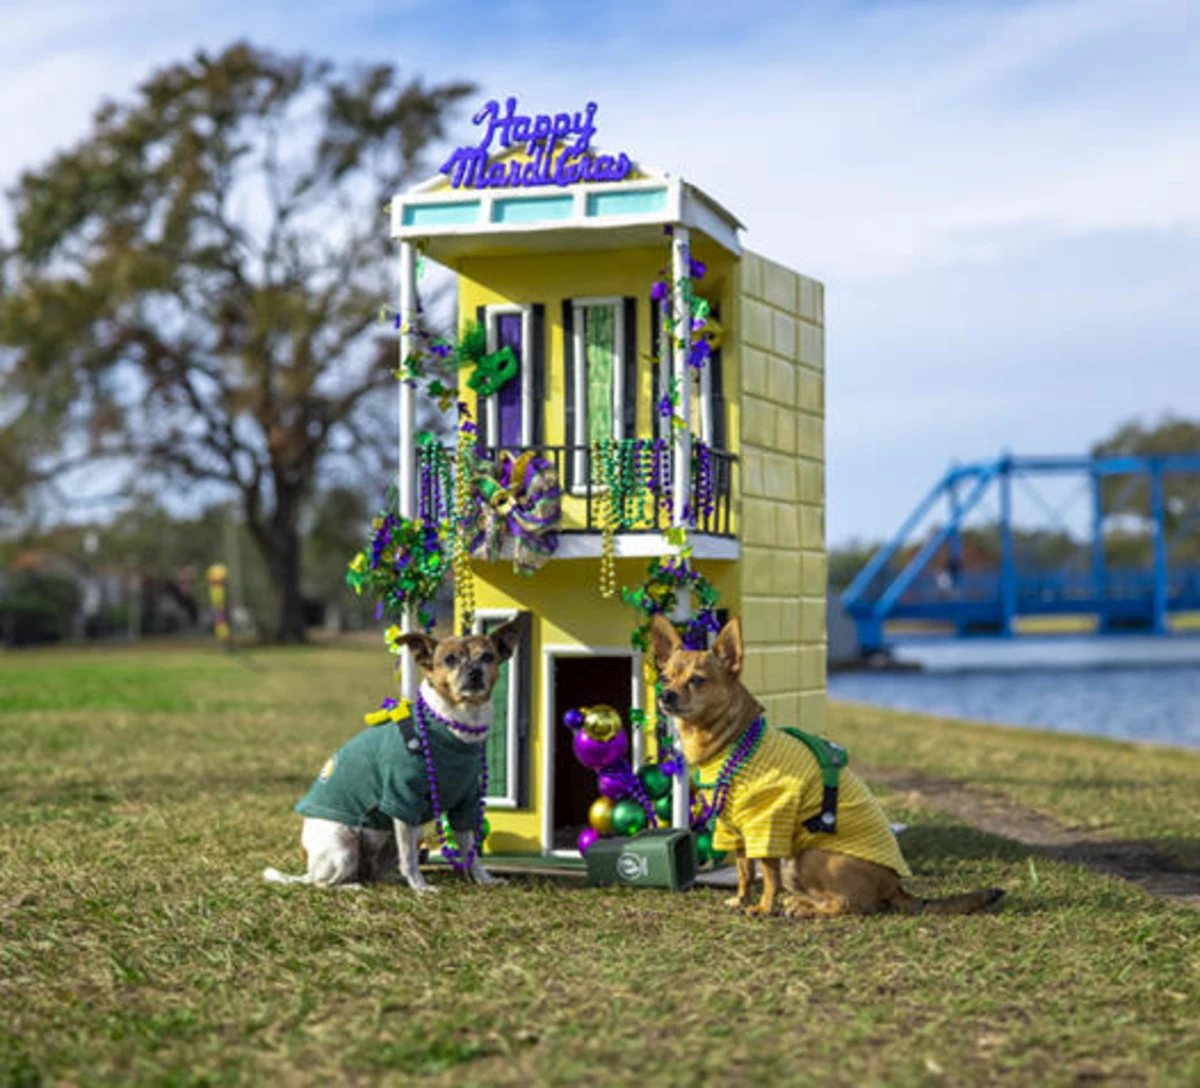 Mardi Paws Dog House Floats Show Creativity and Cheer